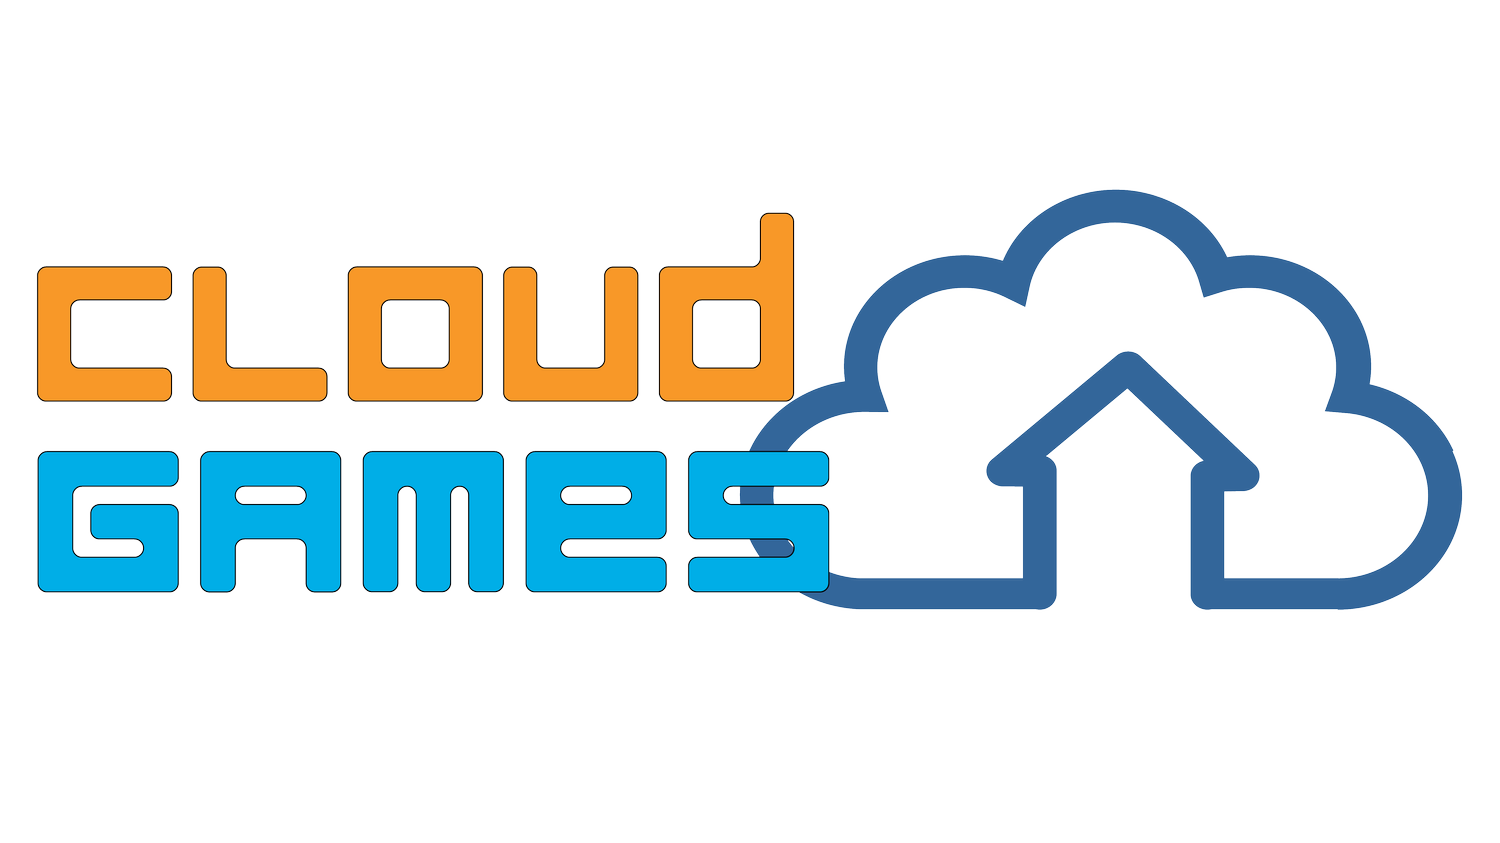 Cloud Games